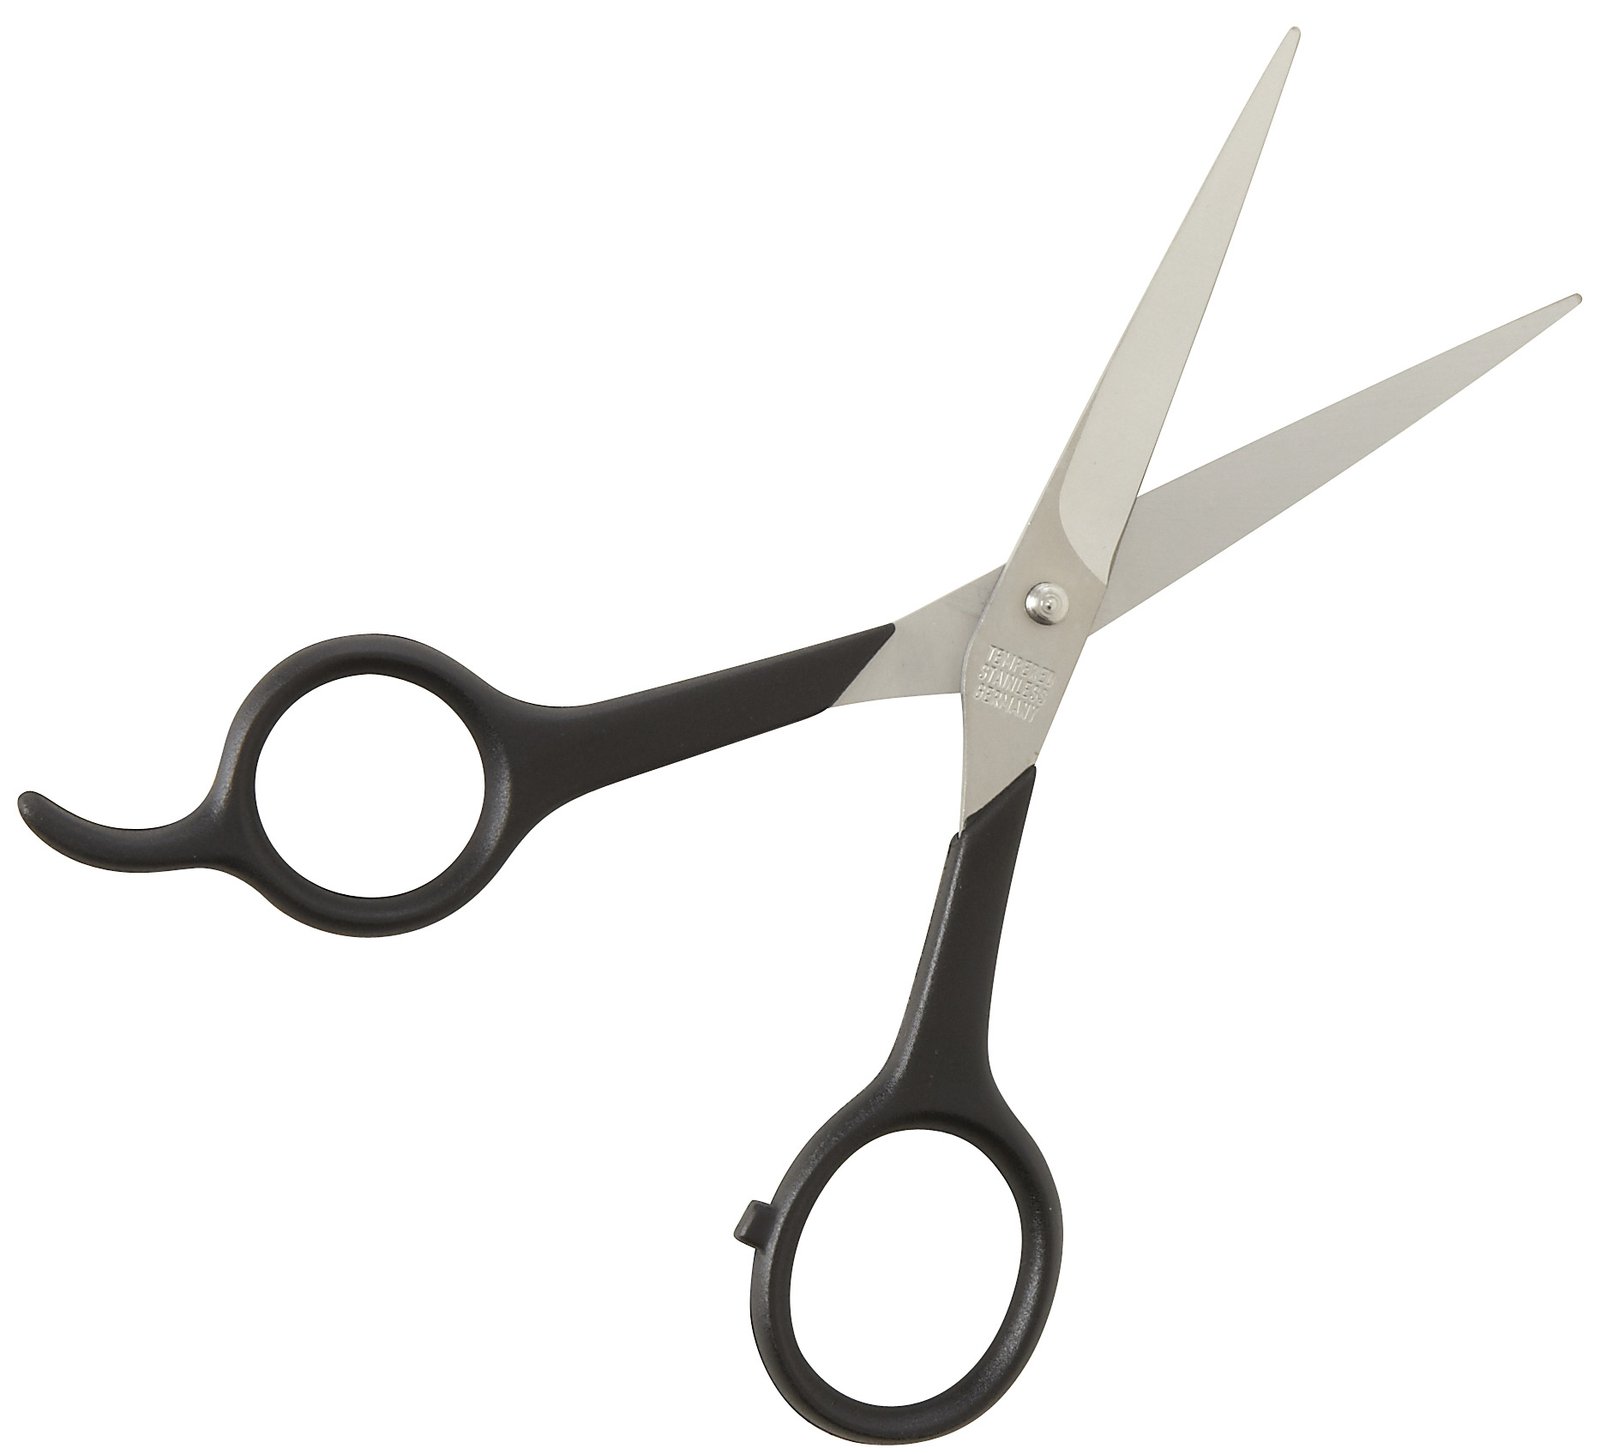 clipart scissors styling